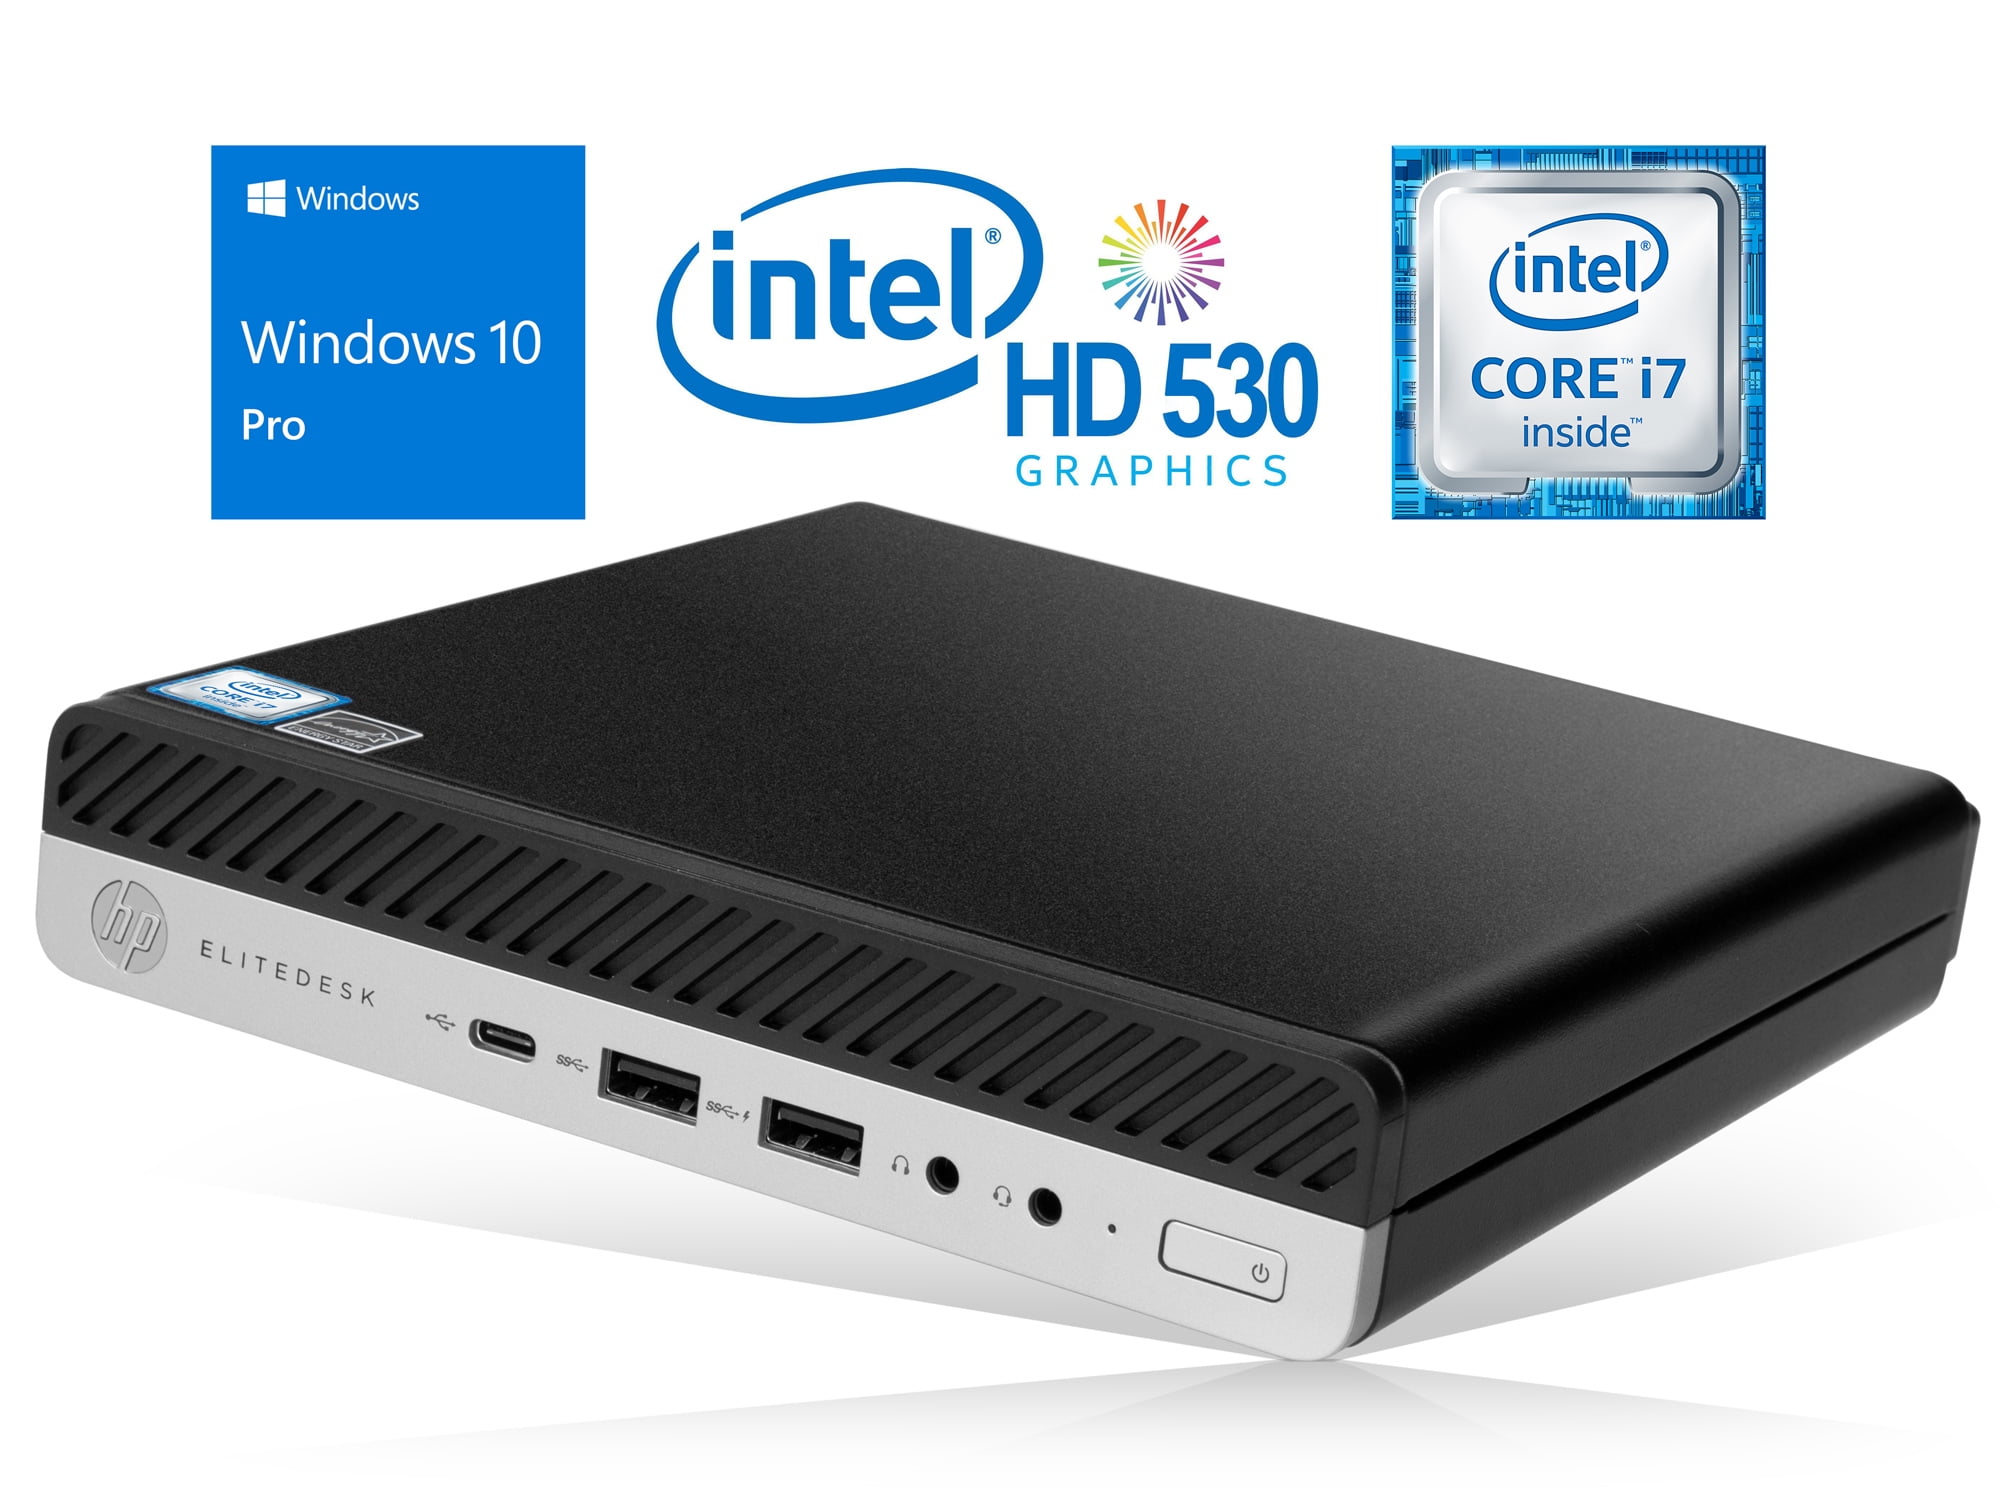 HP EliteDesk 800 G3 Mini PC, Intel Core i7-6700 Upto 4.0GHz, 8GB RAM, 128GB SSD, Bluetooth, Windows 10 Pro - Walmart.com